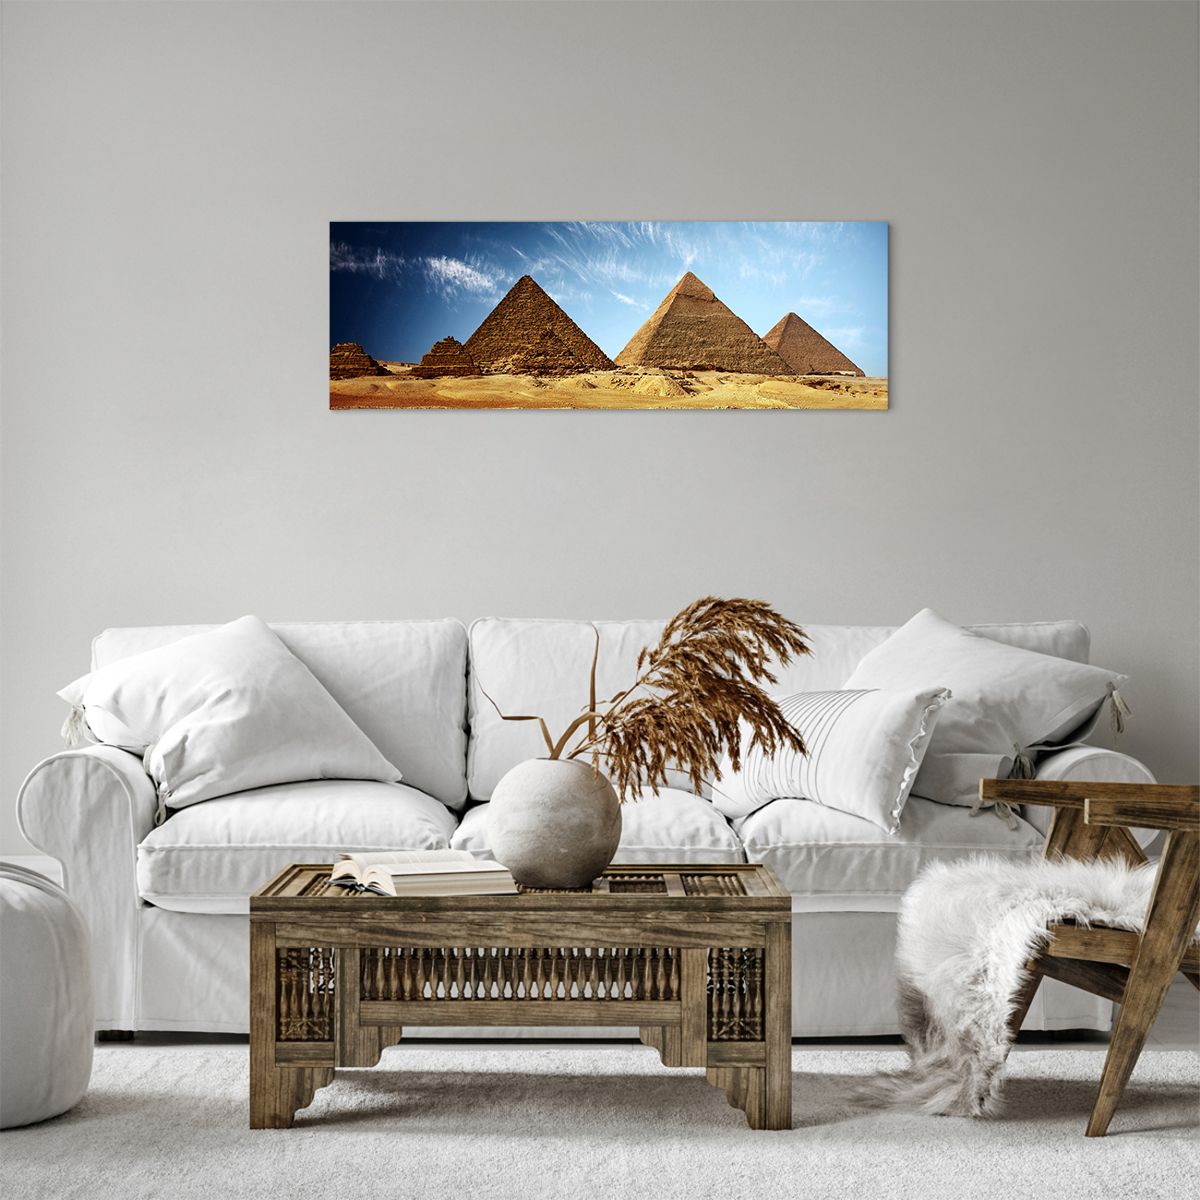 Quadro su tela Piramidi, Quadro su tela Architettura, Quadro su tela Paesaggio, Quadro su tela Egitto, Quadro su tela Deserto